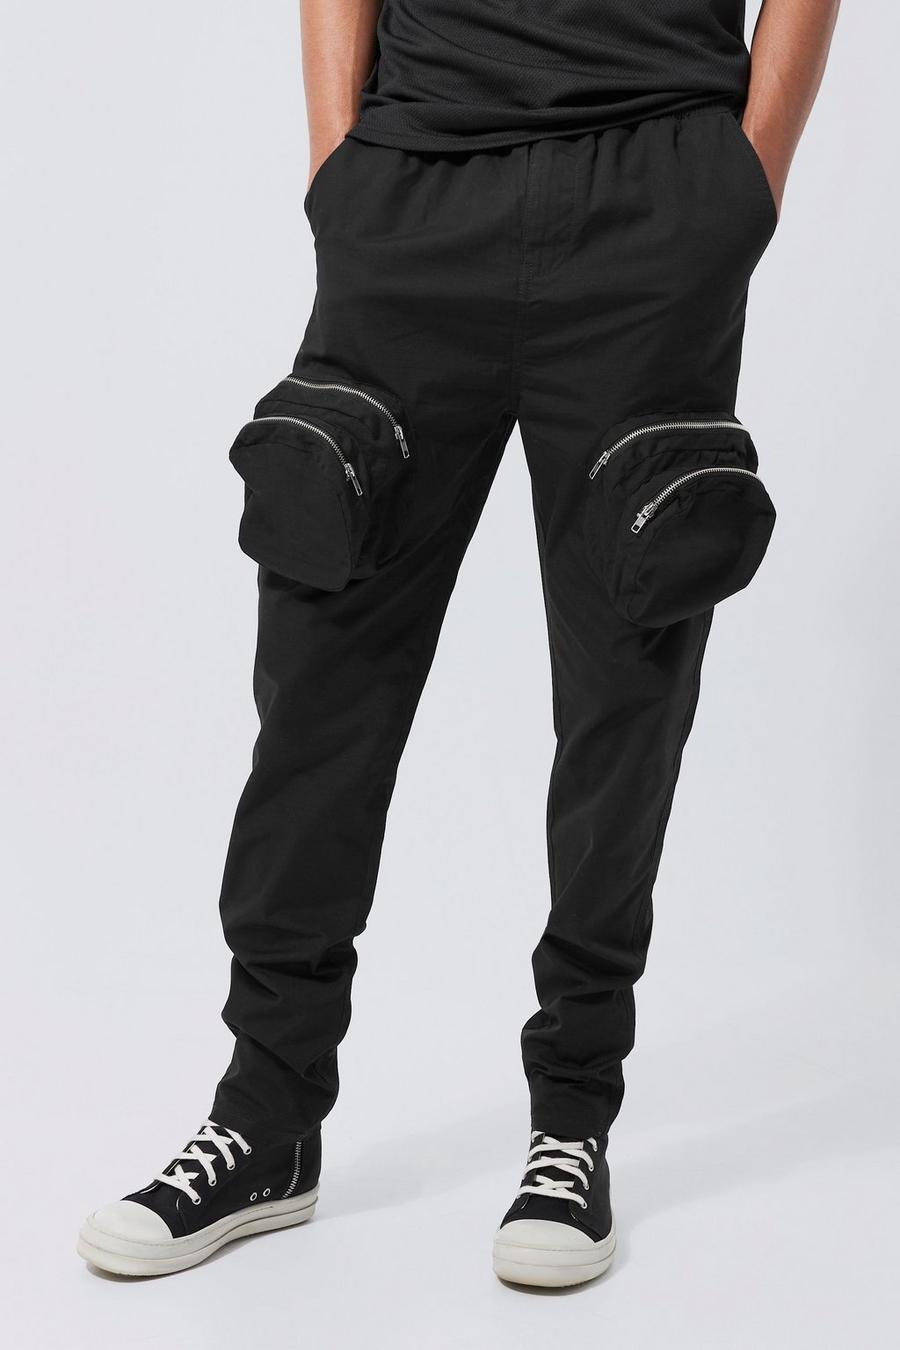 Pantalón Tall cargo ajustado elegante con cremallera 3D, Black nero